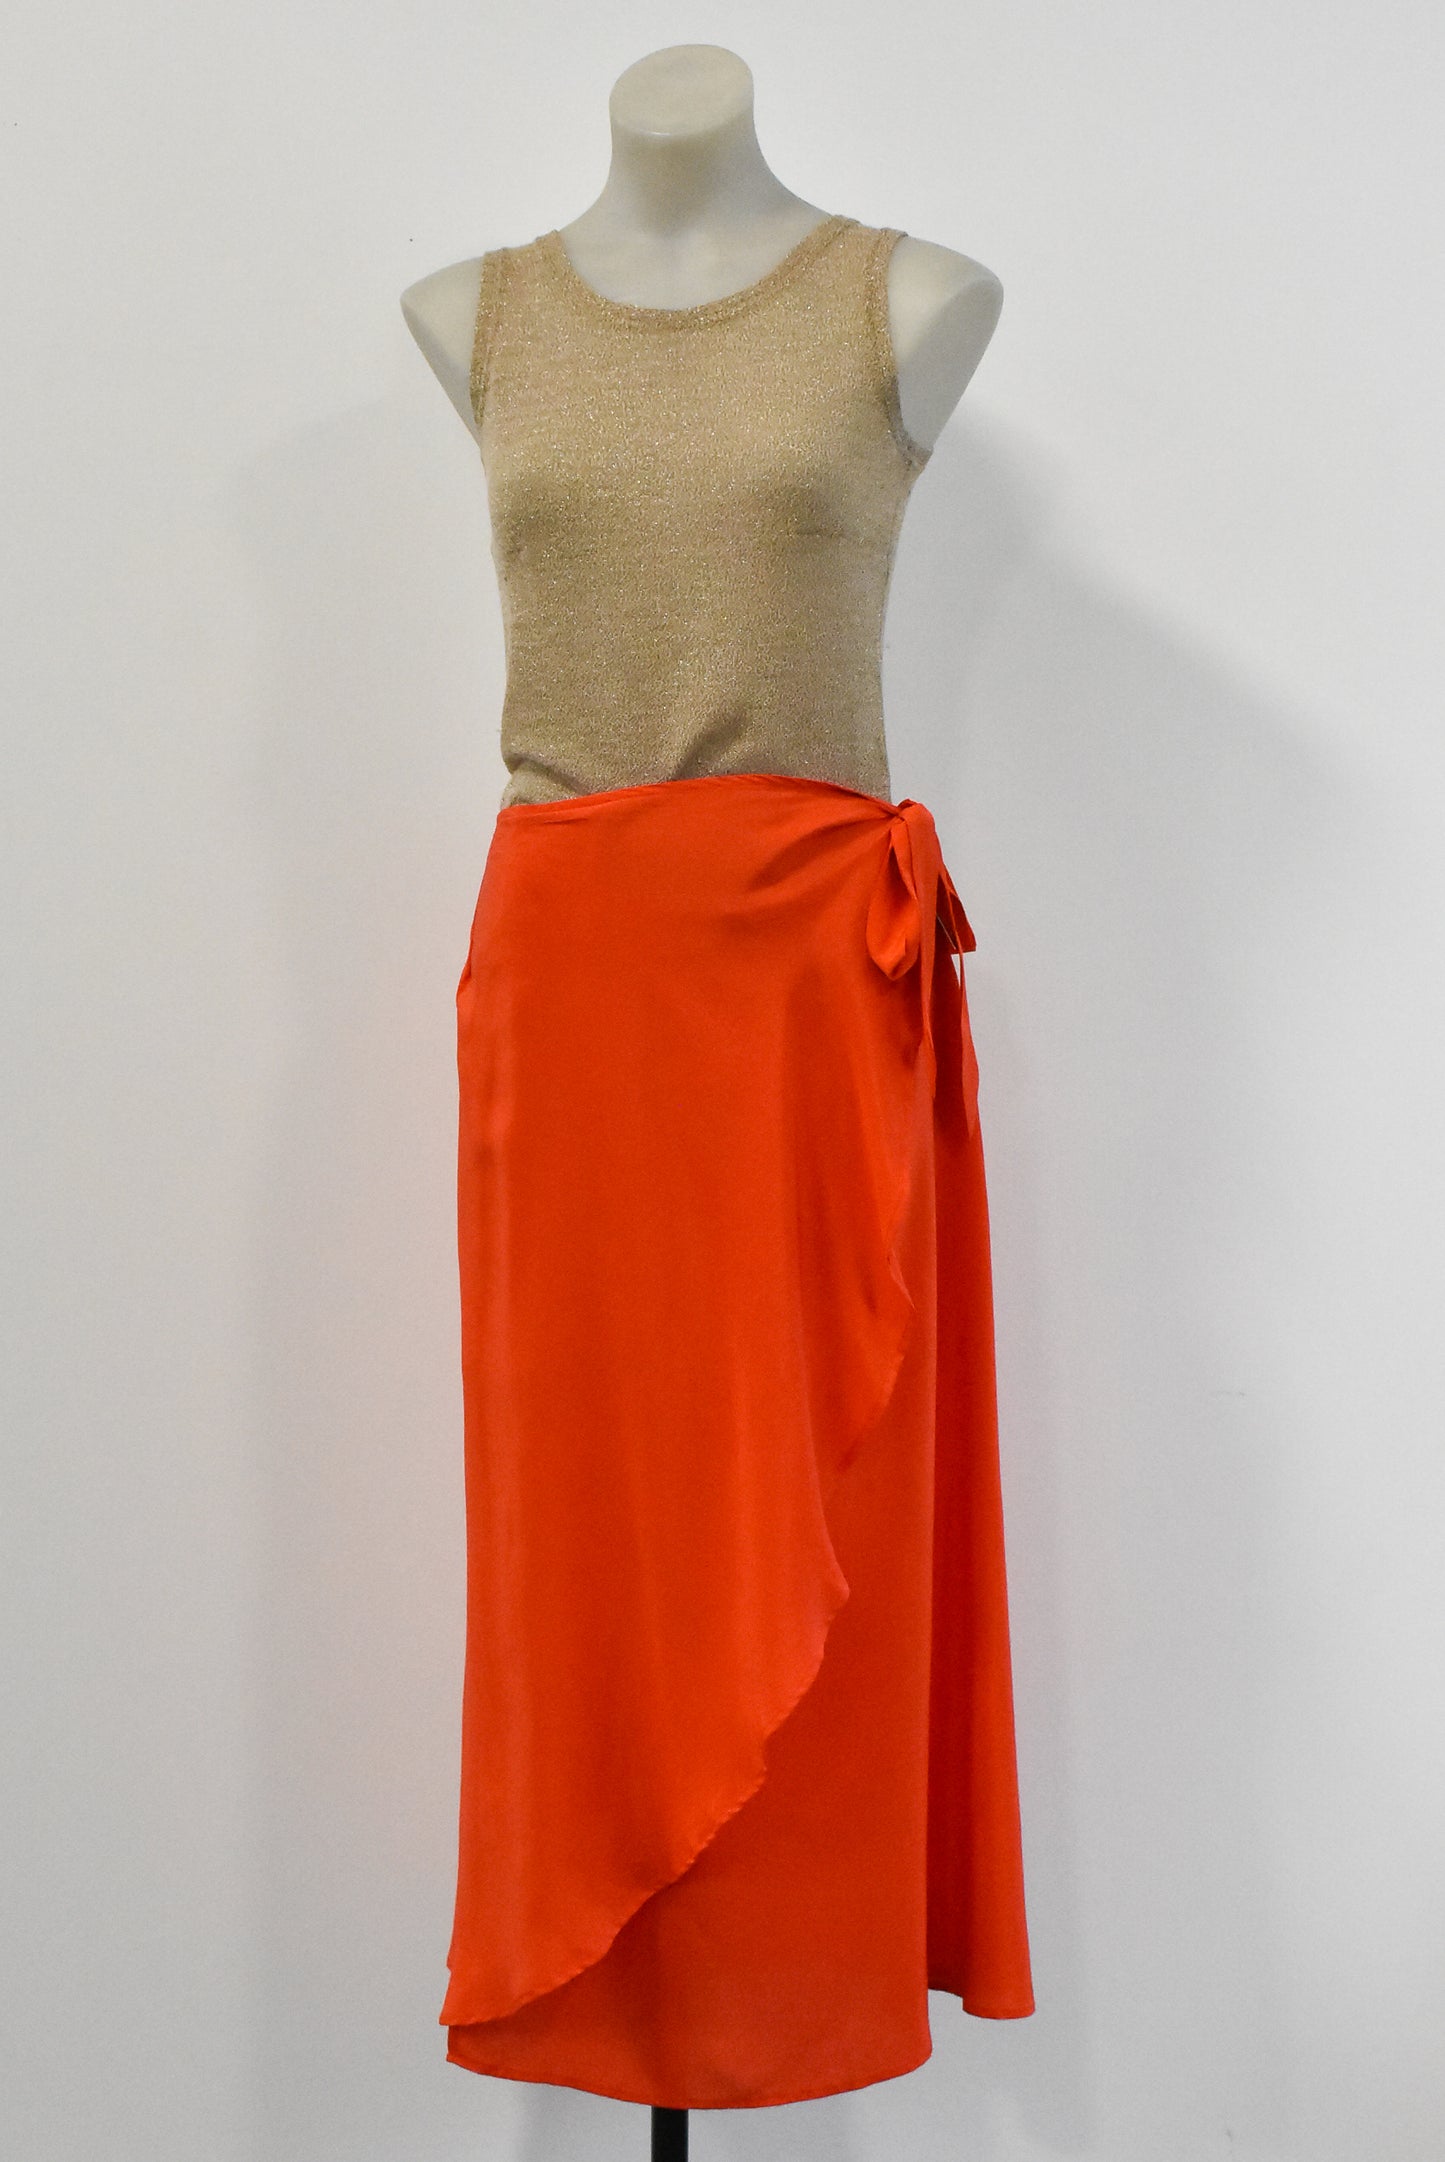 Ruby silk wraparound skirt, M